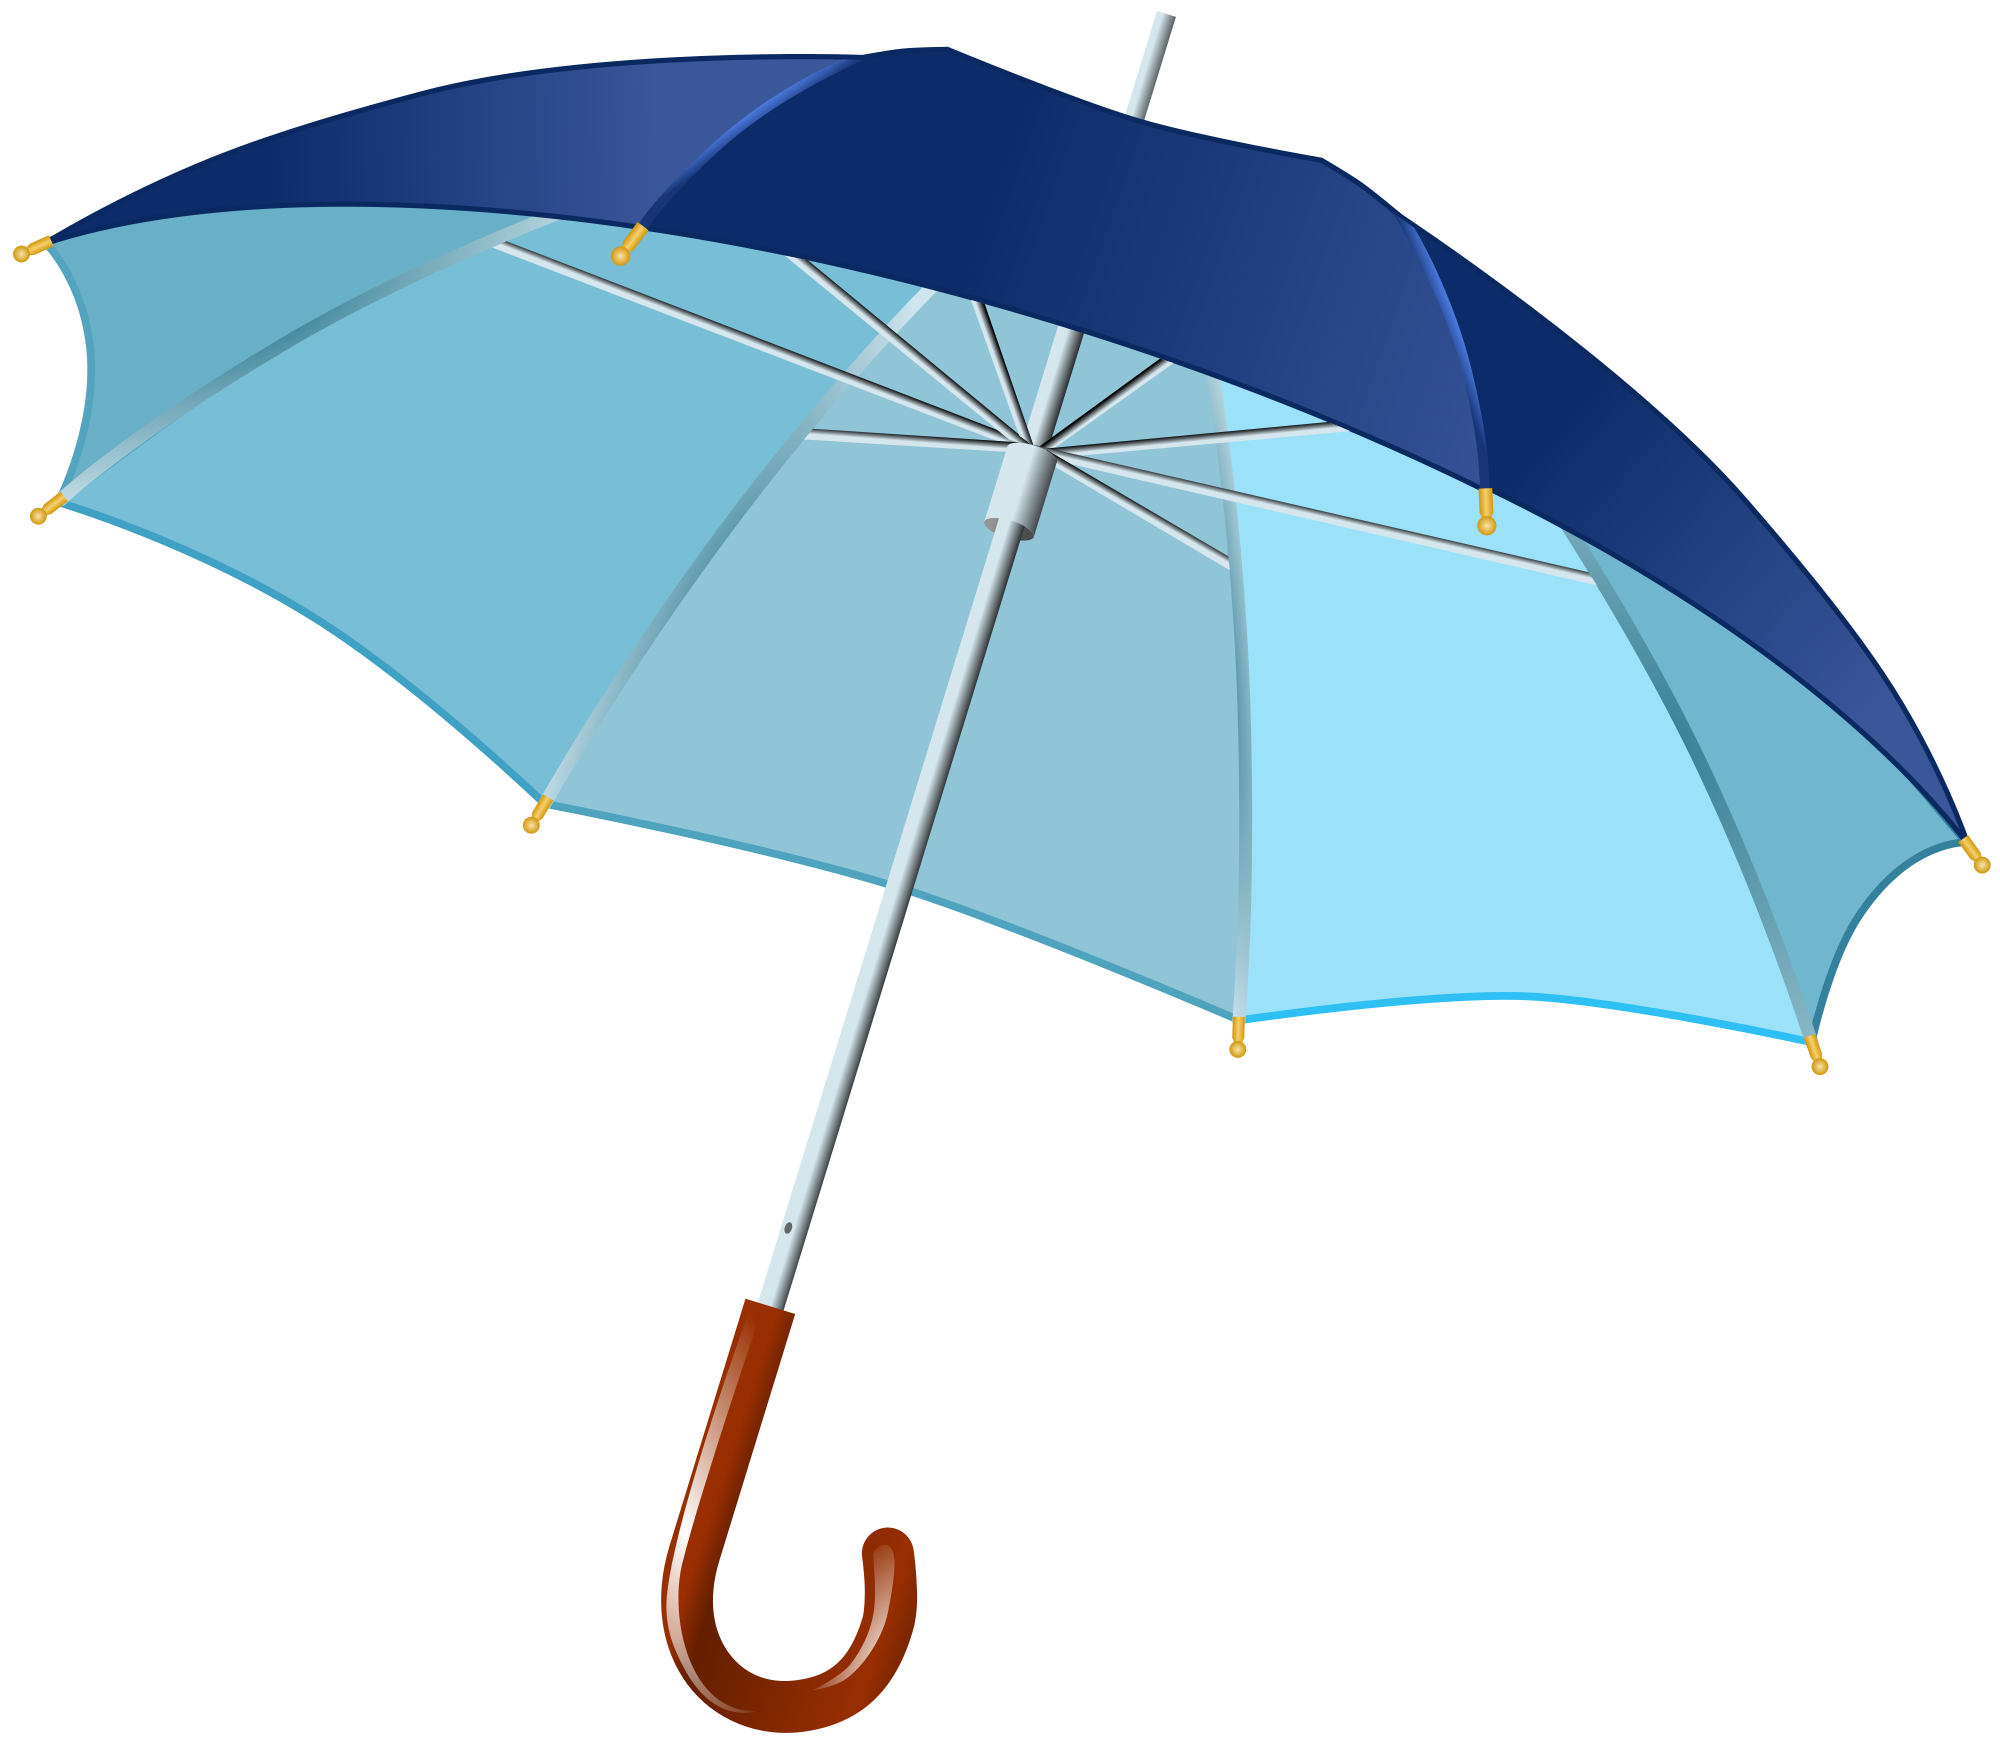 Clipart umbrella chatri. Images qygjxz x px